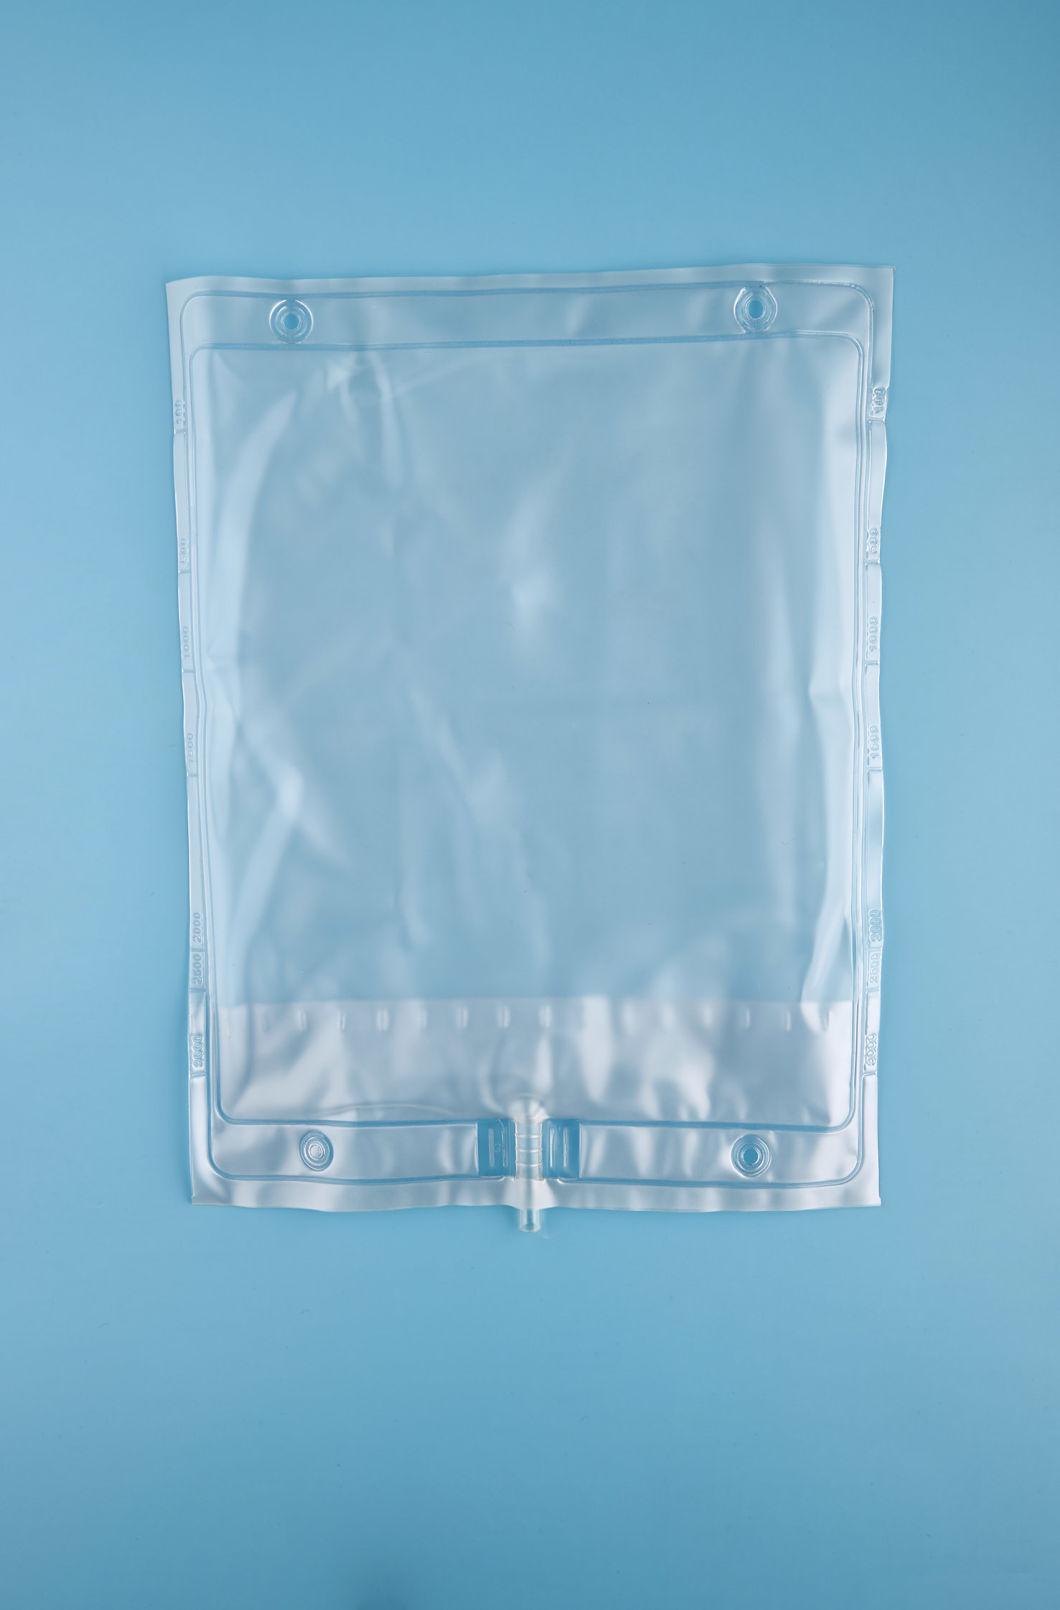 1000ml 1500ml 2000ml Good Quality Medical Urine Drainage Bag with Free Needle Sampling Port and Tube Clamp